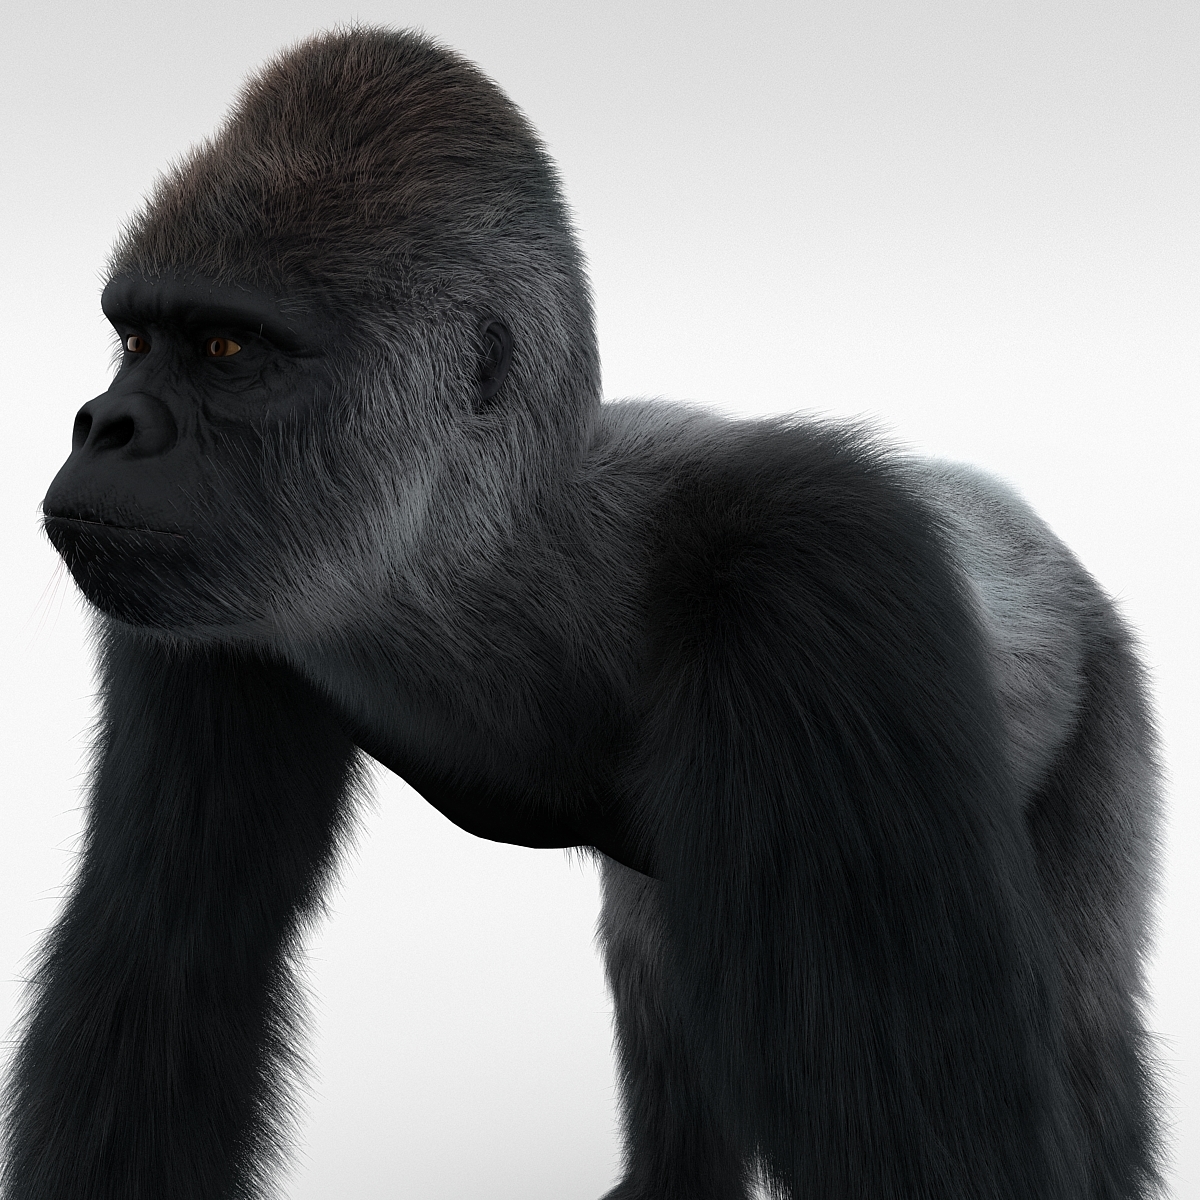 gorilla pose 2 fur 3d model